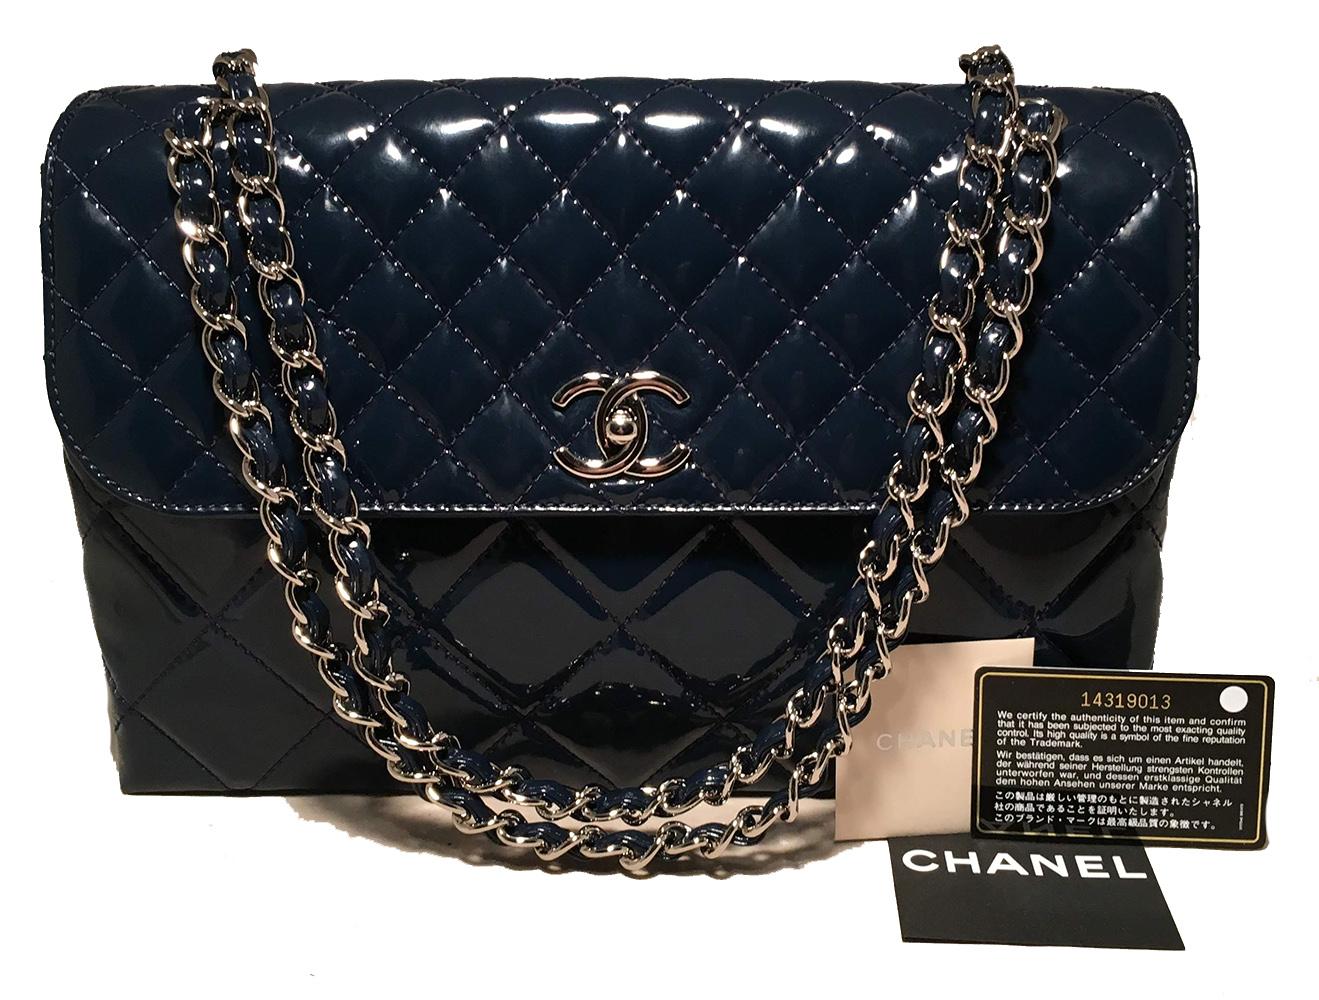 Chanel Marine Navy Patent Leather Jumbo Classic Flap Shoulder Bag 6